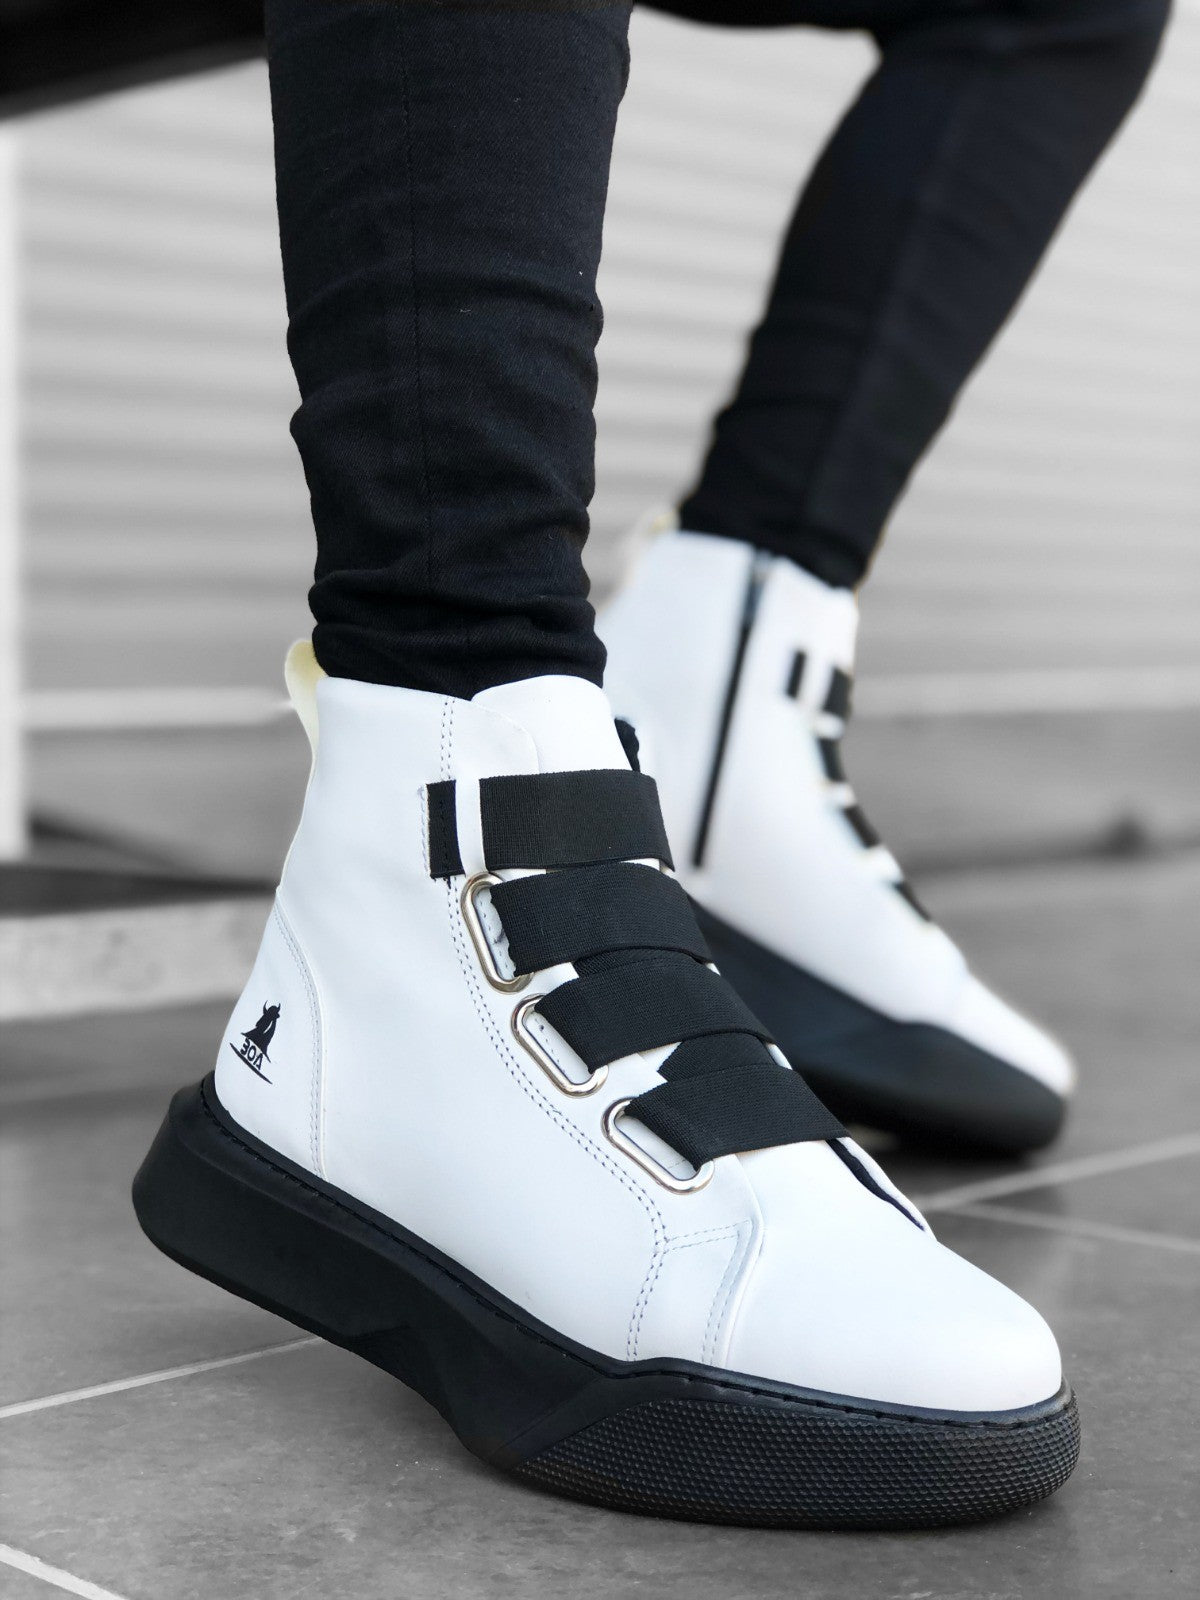 BA0142 Banded Men's High Sole Black Sport Boots - Men Fashion Sneaker Shoes Men's Sneaker Boots - STREETMODE™